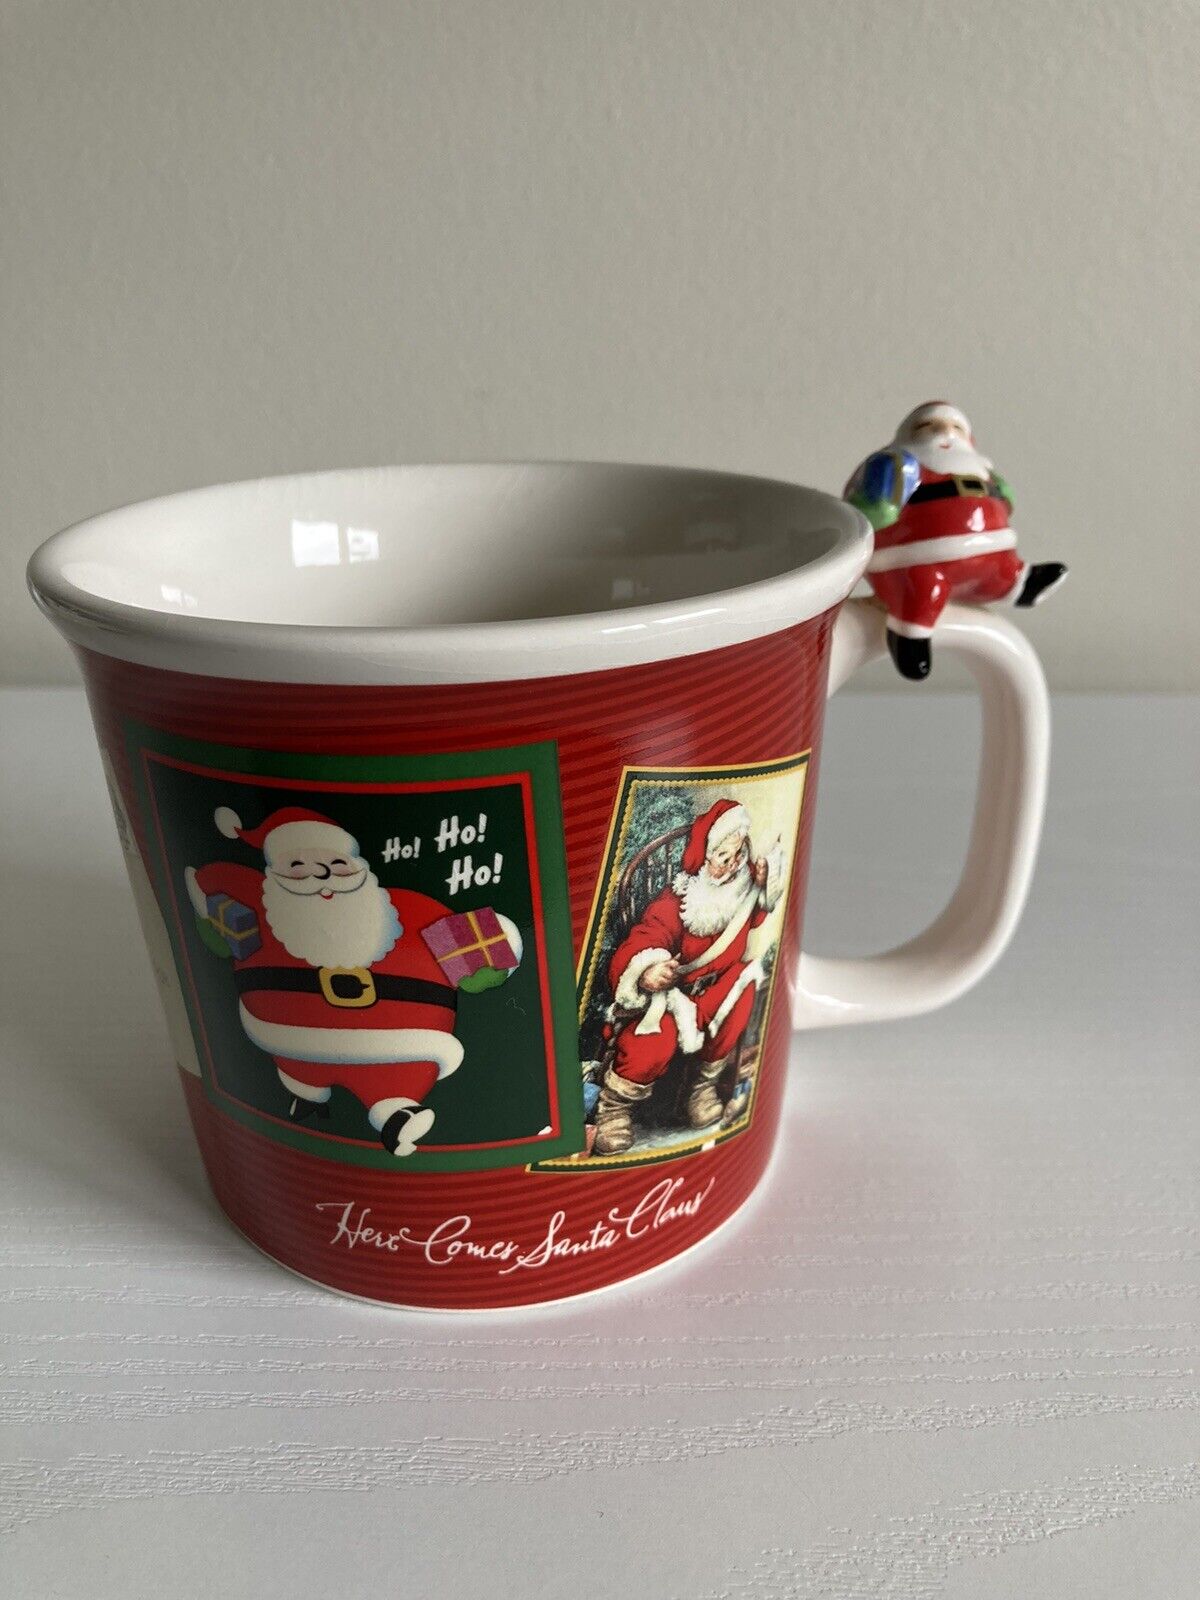 Bath And Body Works Here Comes Santa Claus Ceramic Coffee Mug Christmas/3d Santa